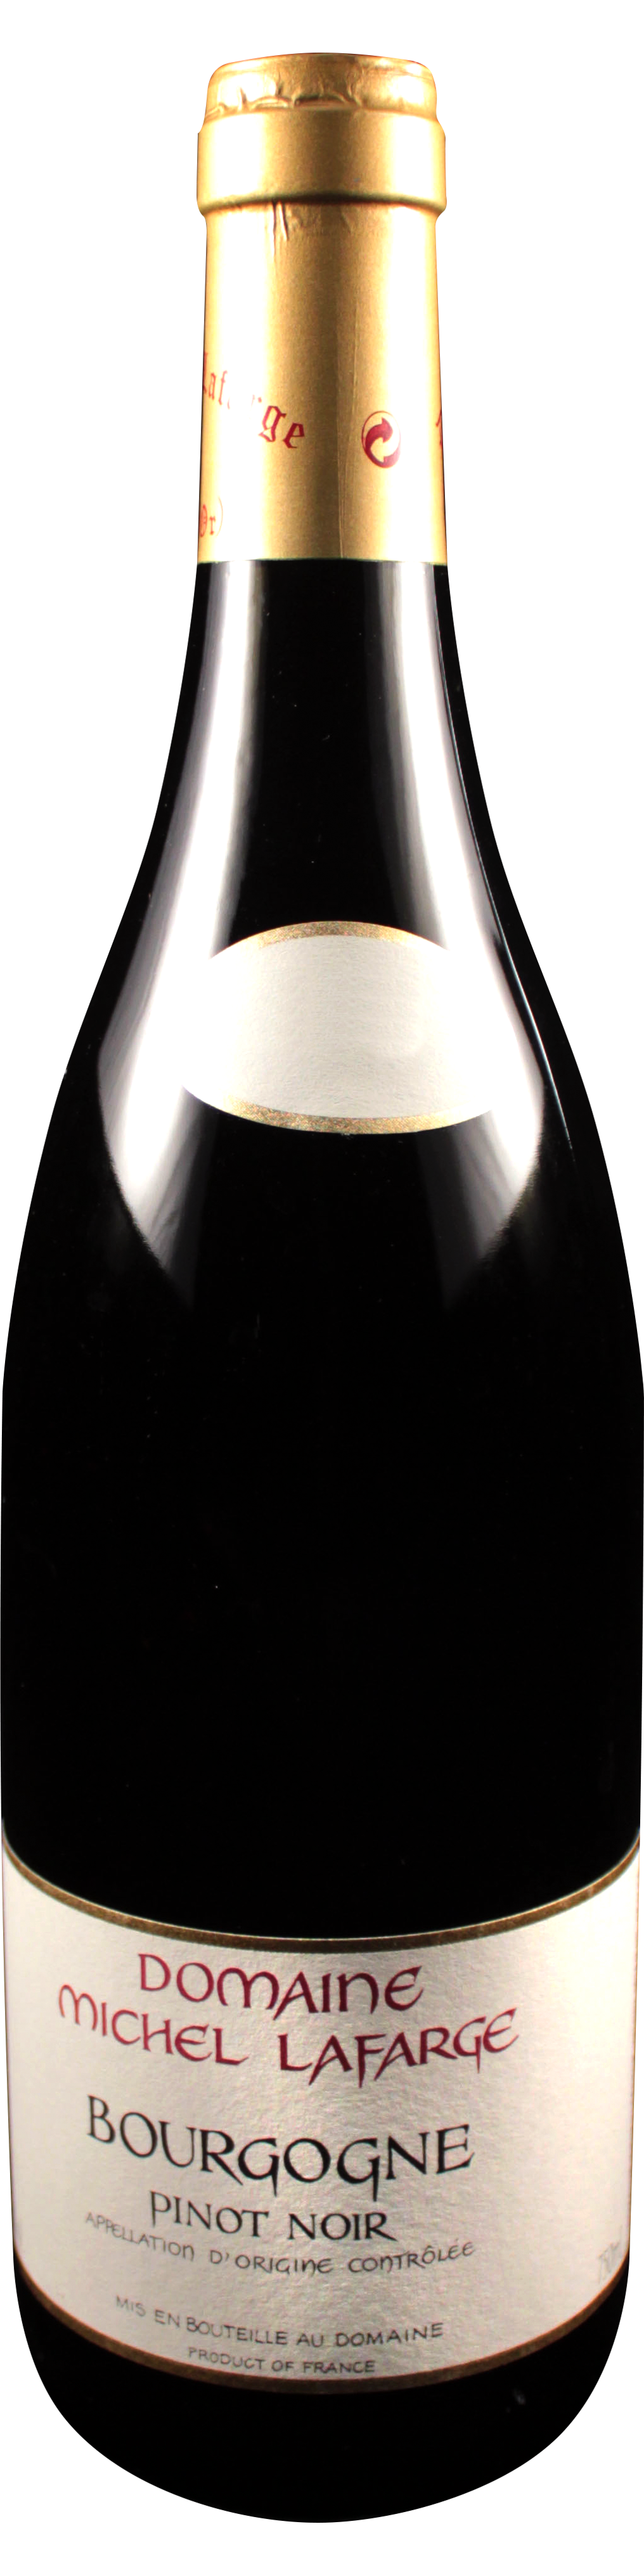 Image of product Bourgogne Pinot Noir